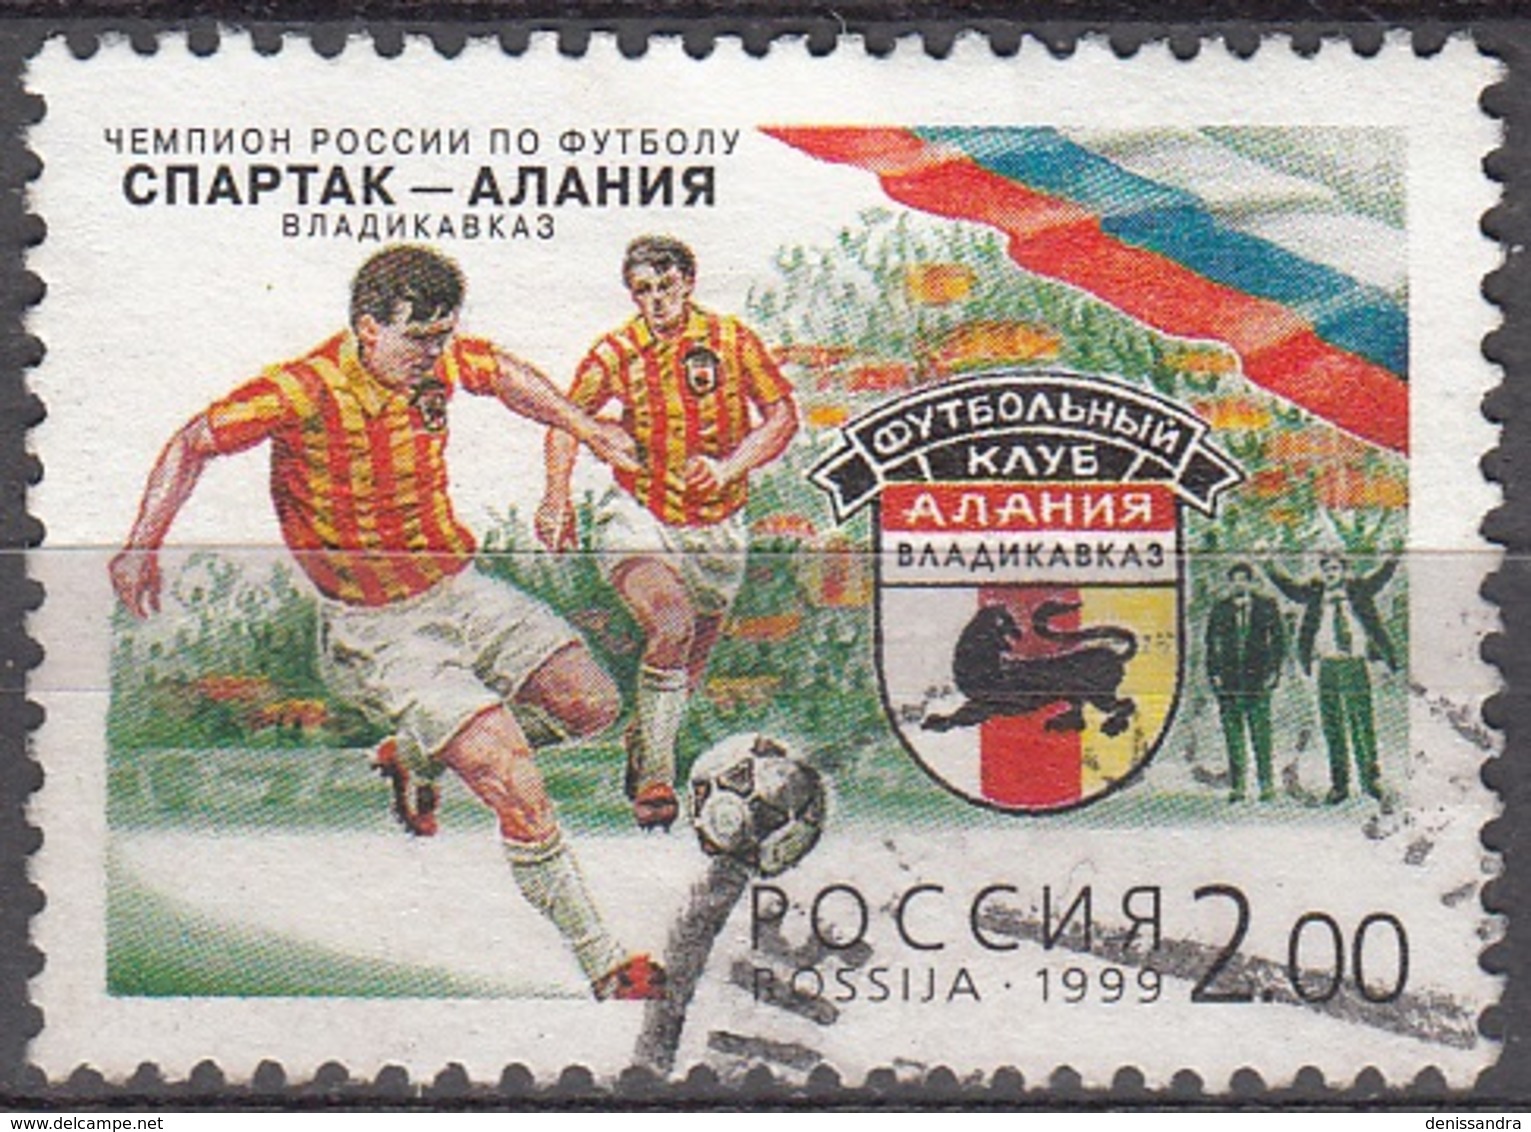 Rossija 1999 Michel 775 O Cote (2008) 0.20 Euro 1995 Spartak-Alania Vladikavkaz Remporte Le Championnat Cachet Rond - Oblitérés